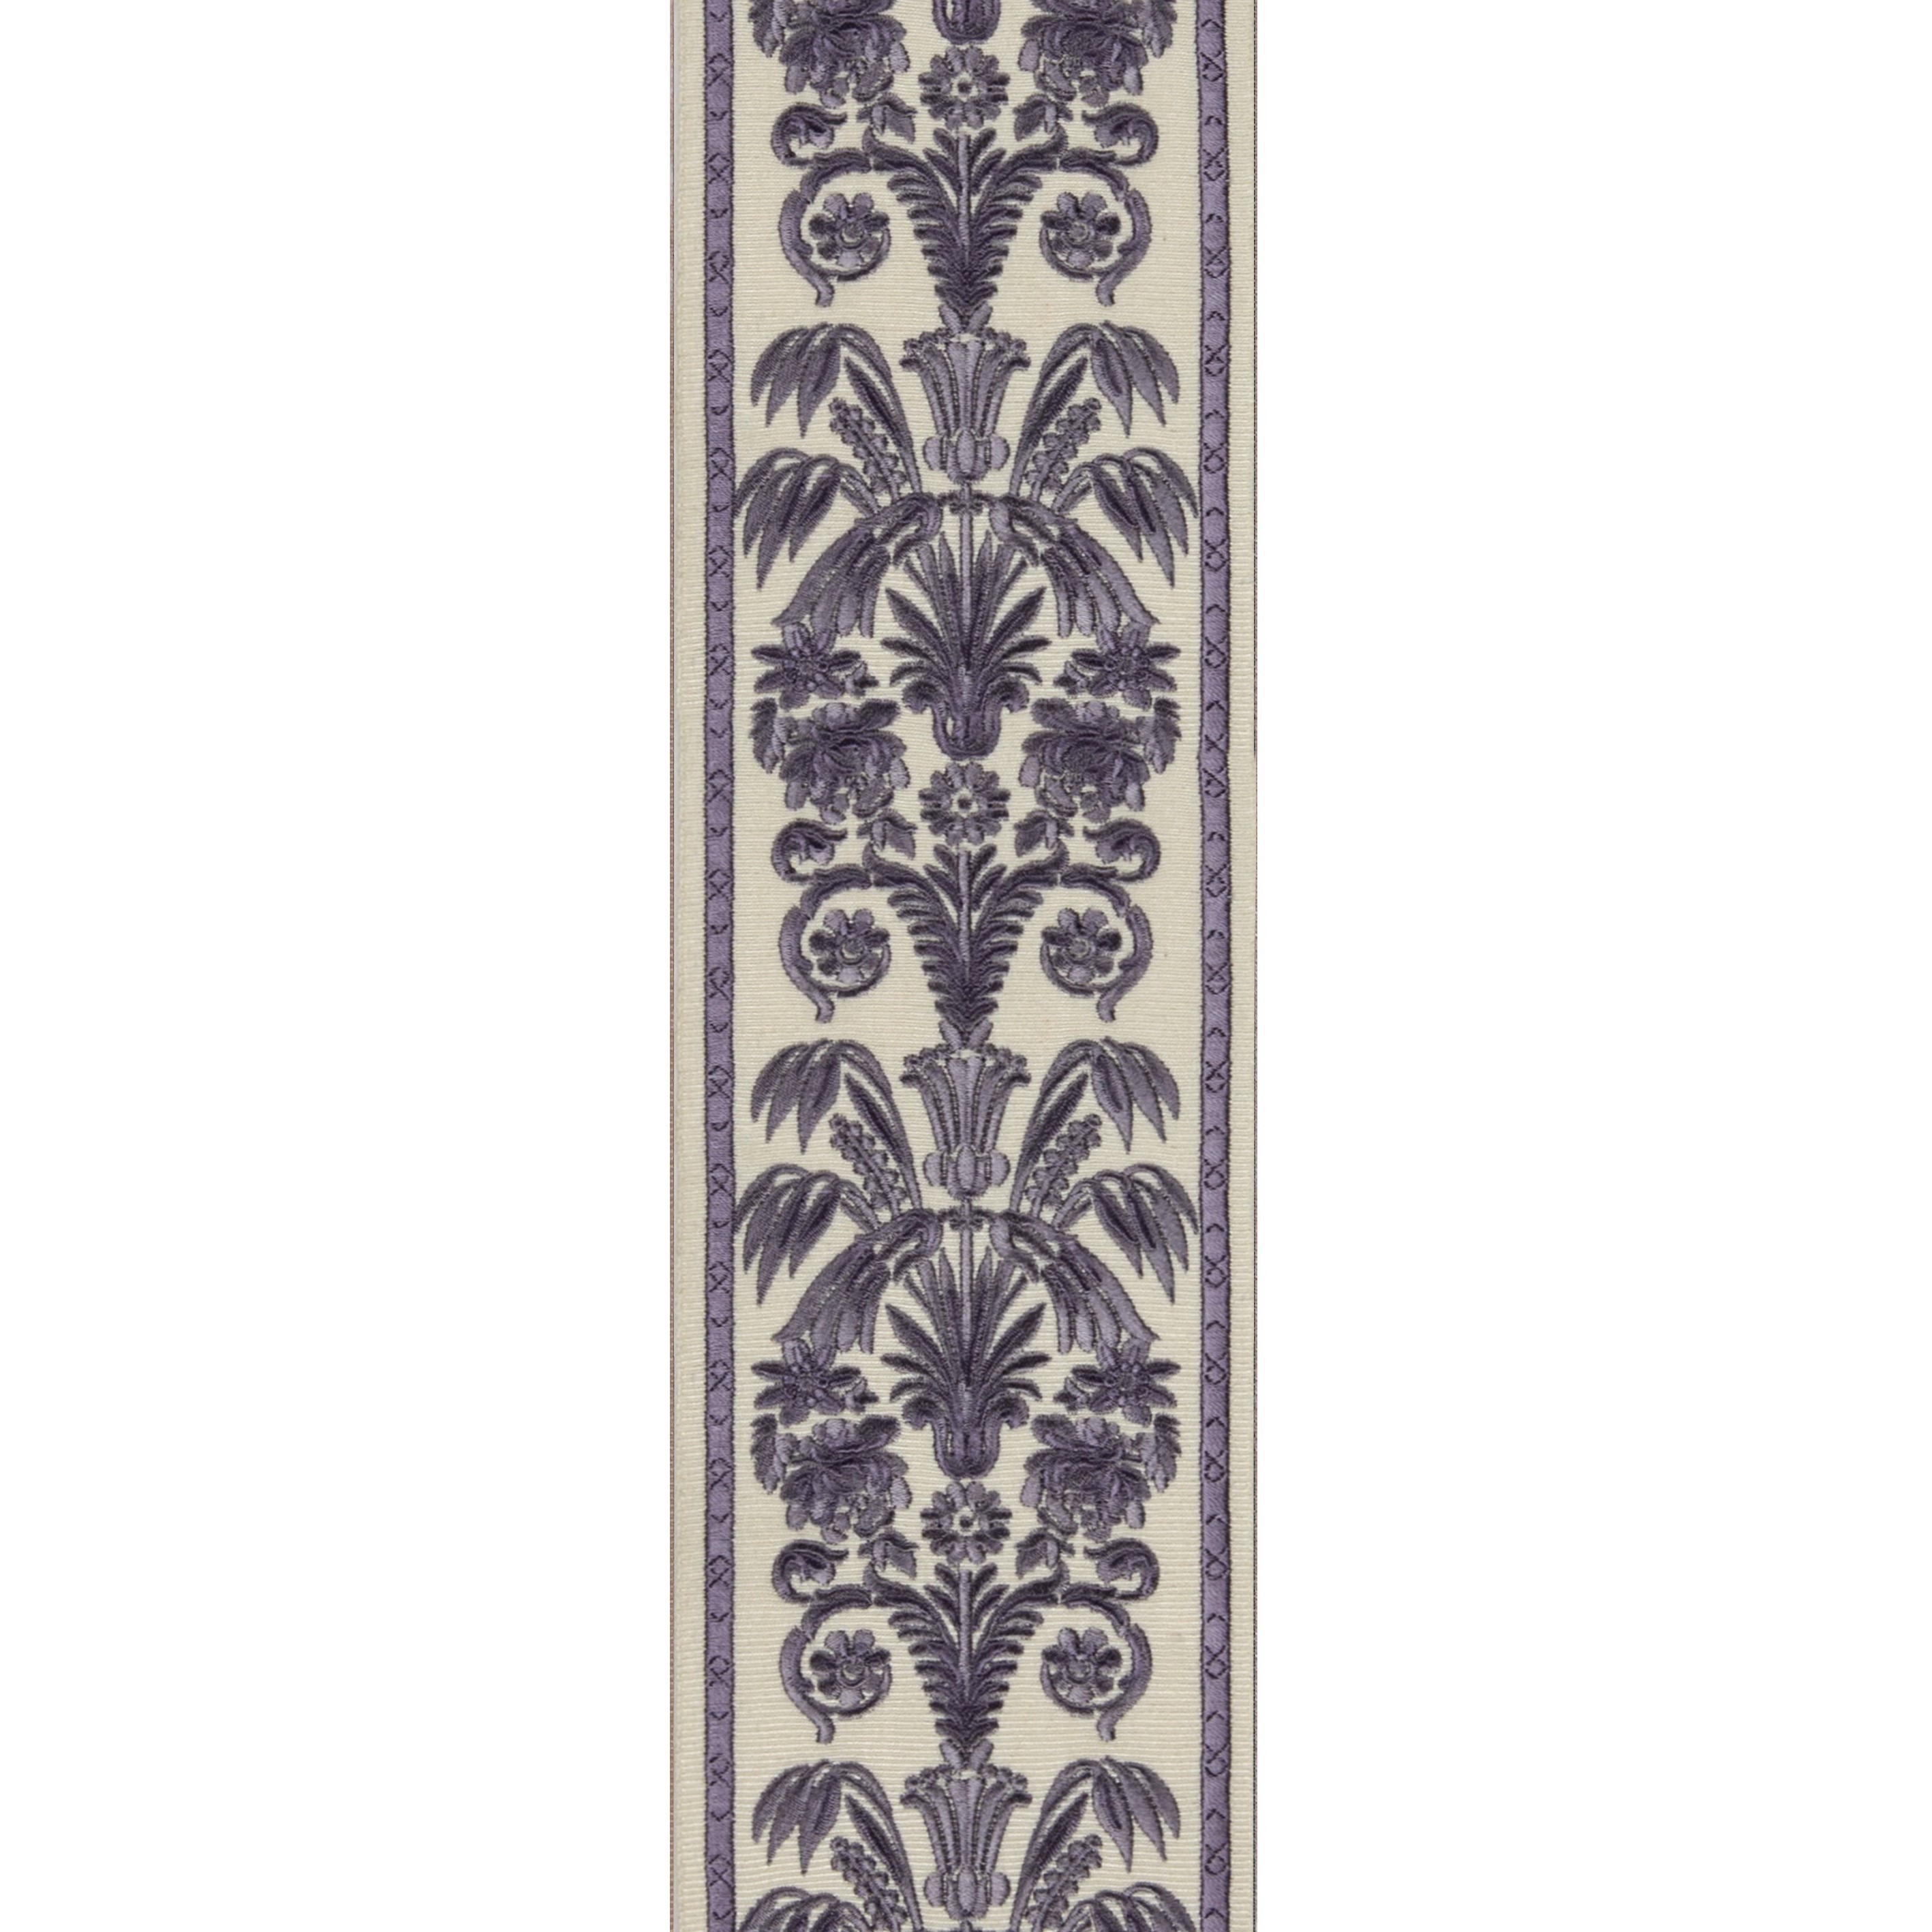 3cm  5cm  9cm Curtain Fabric Curtain Border Lace Embroidery Tape